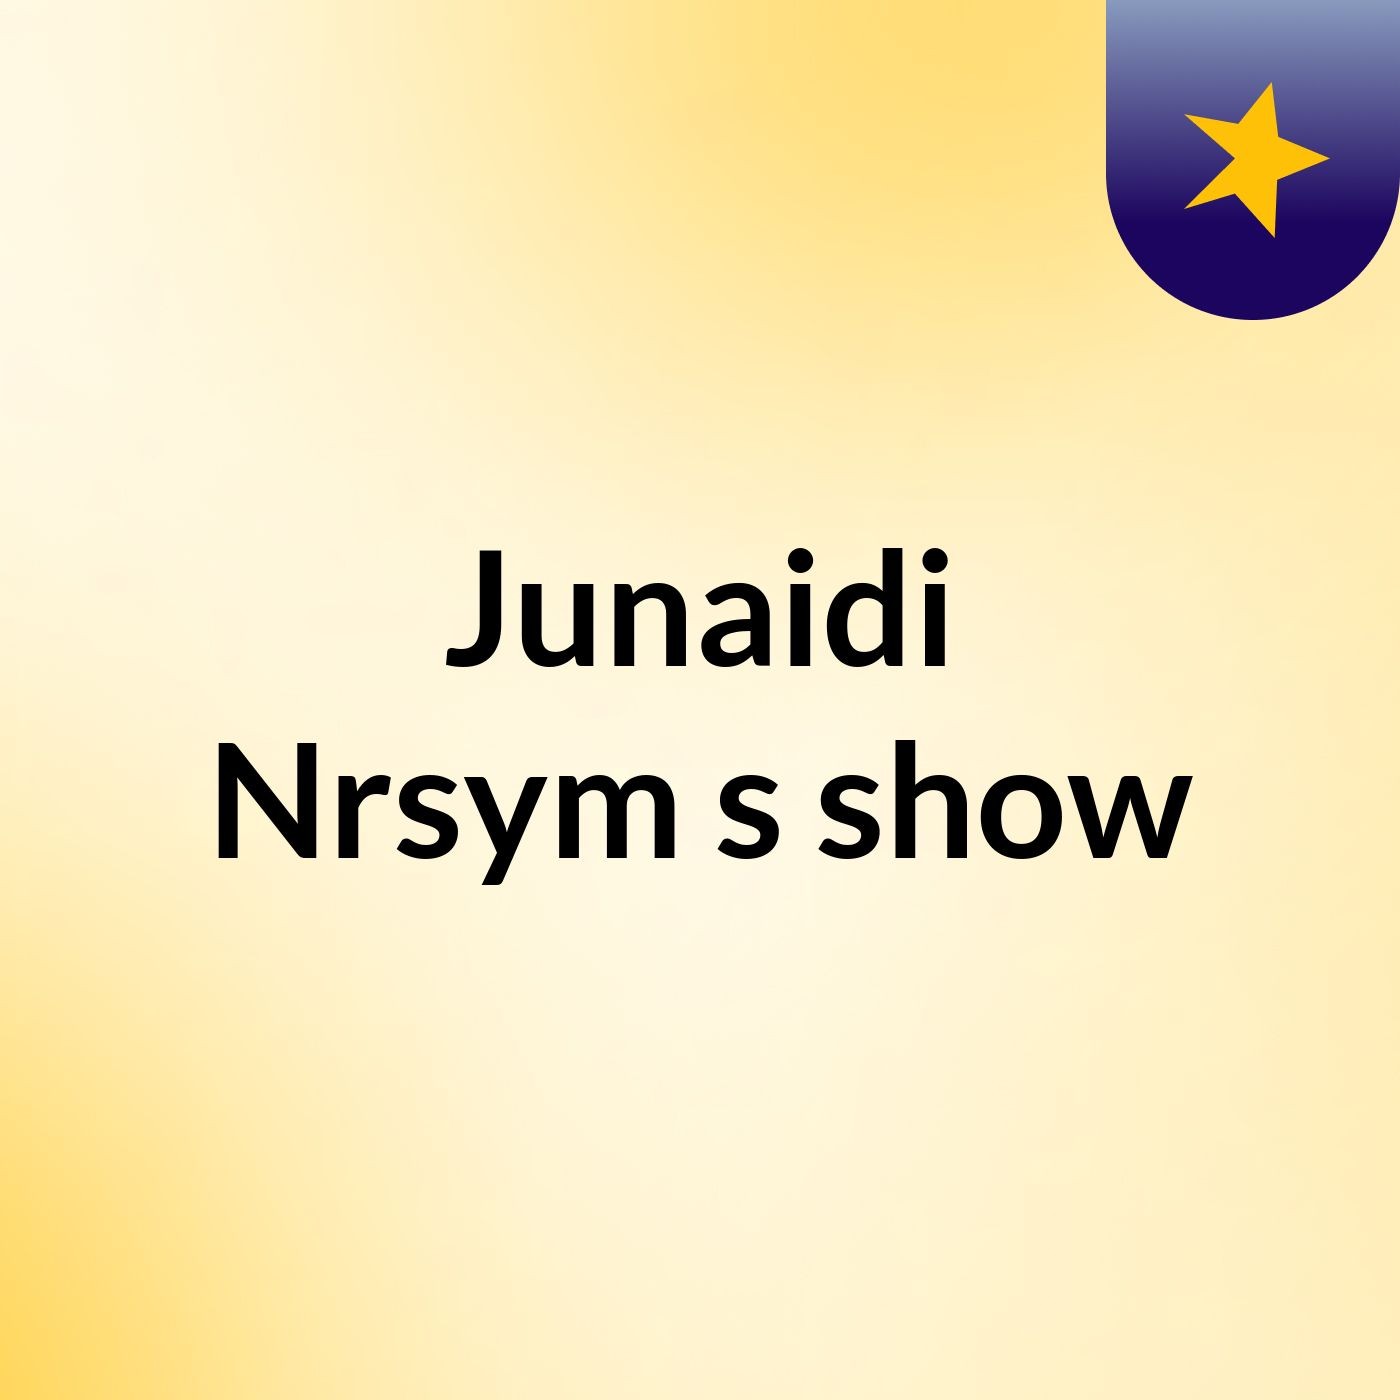 Junaidi Nrsym's show